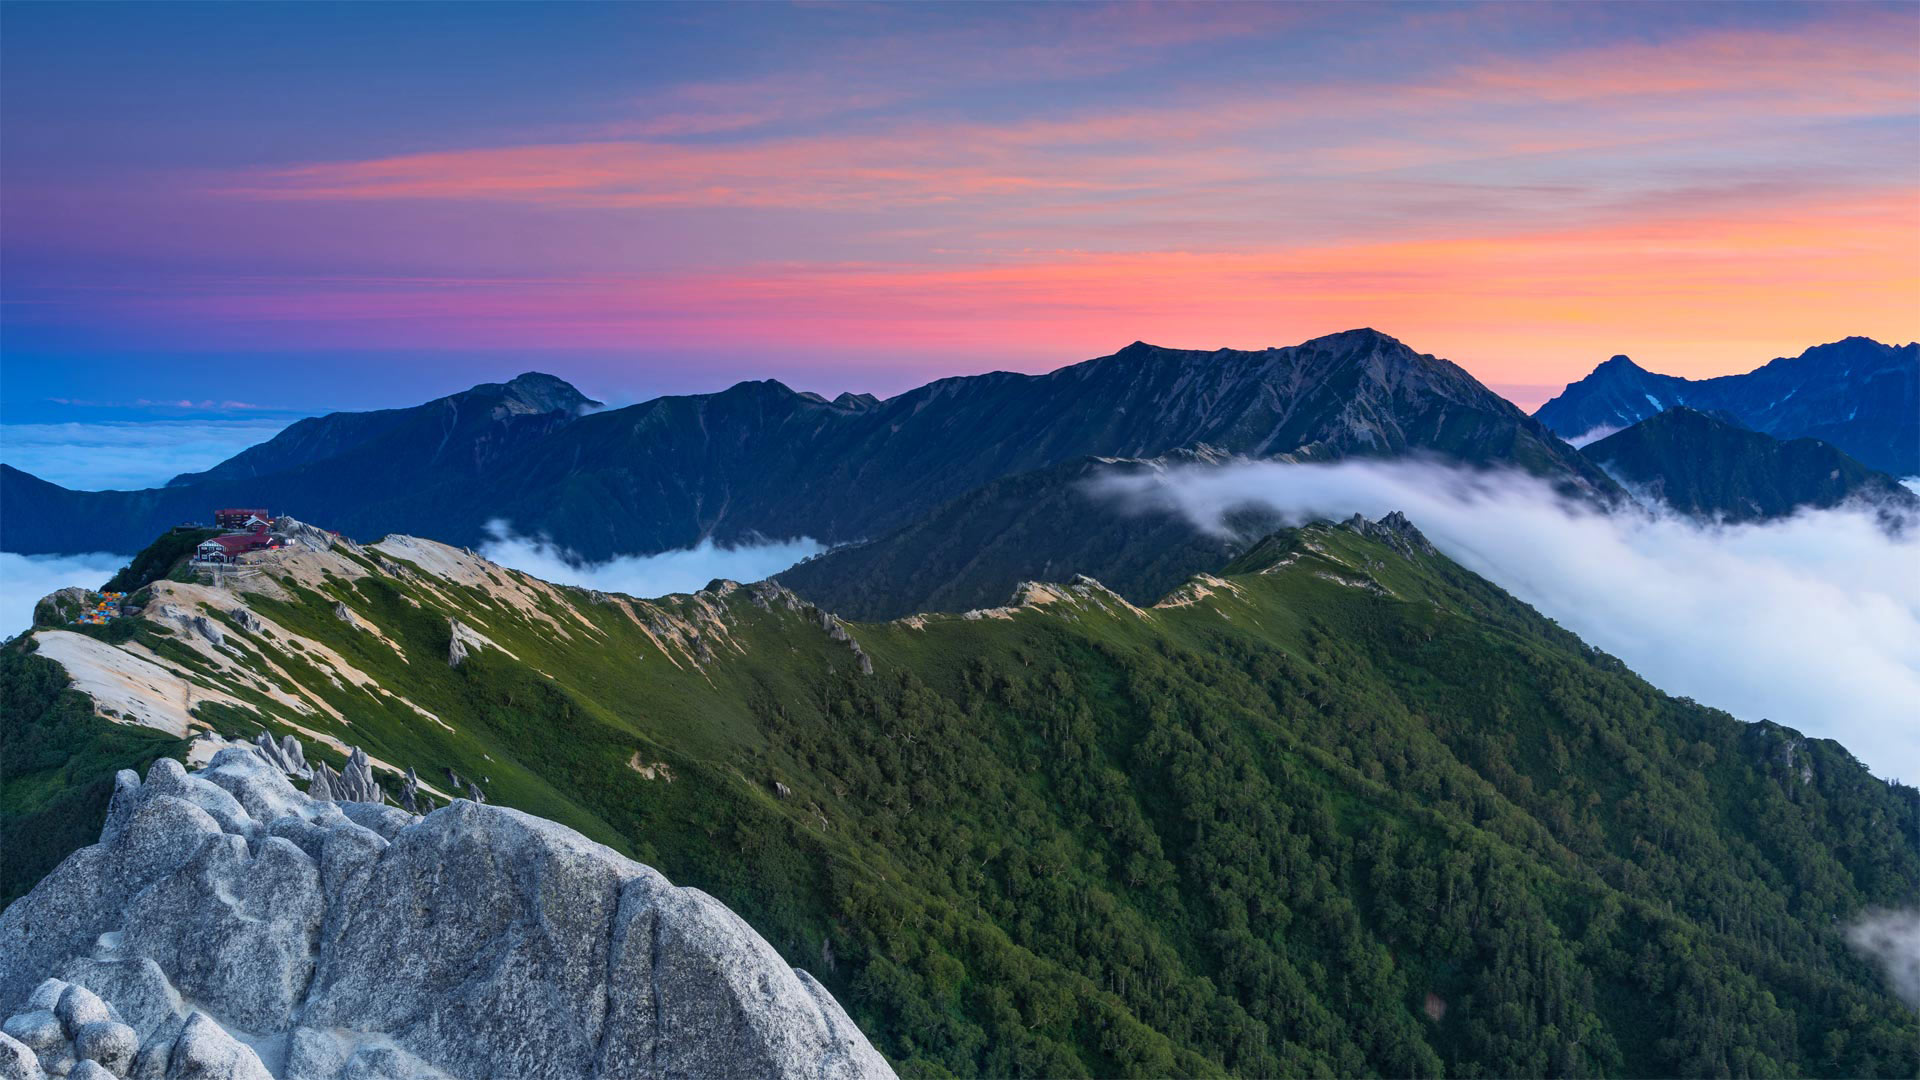 Mount Tsubakuro near Azumino, Nagano, Japan - Joshua Hawley/Getty Images)